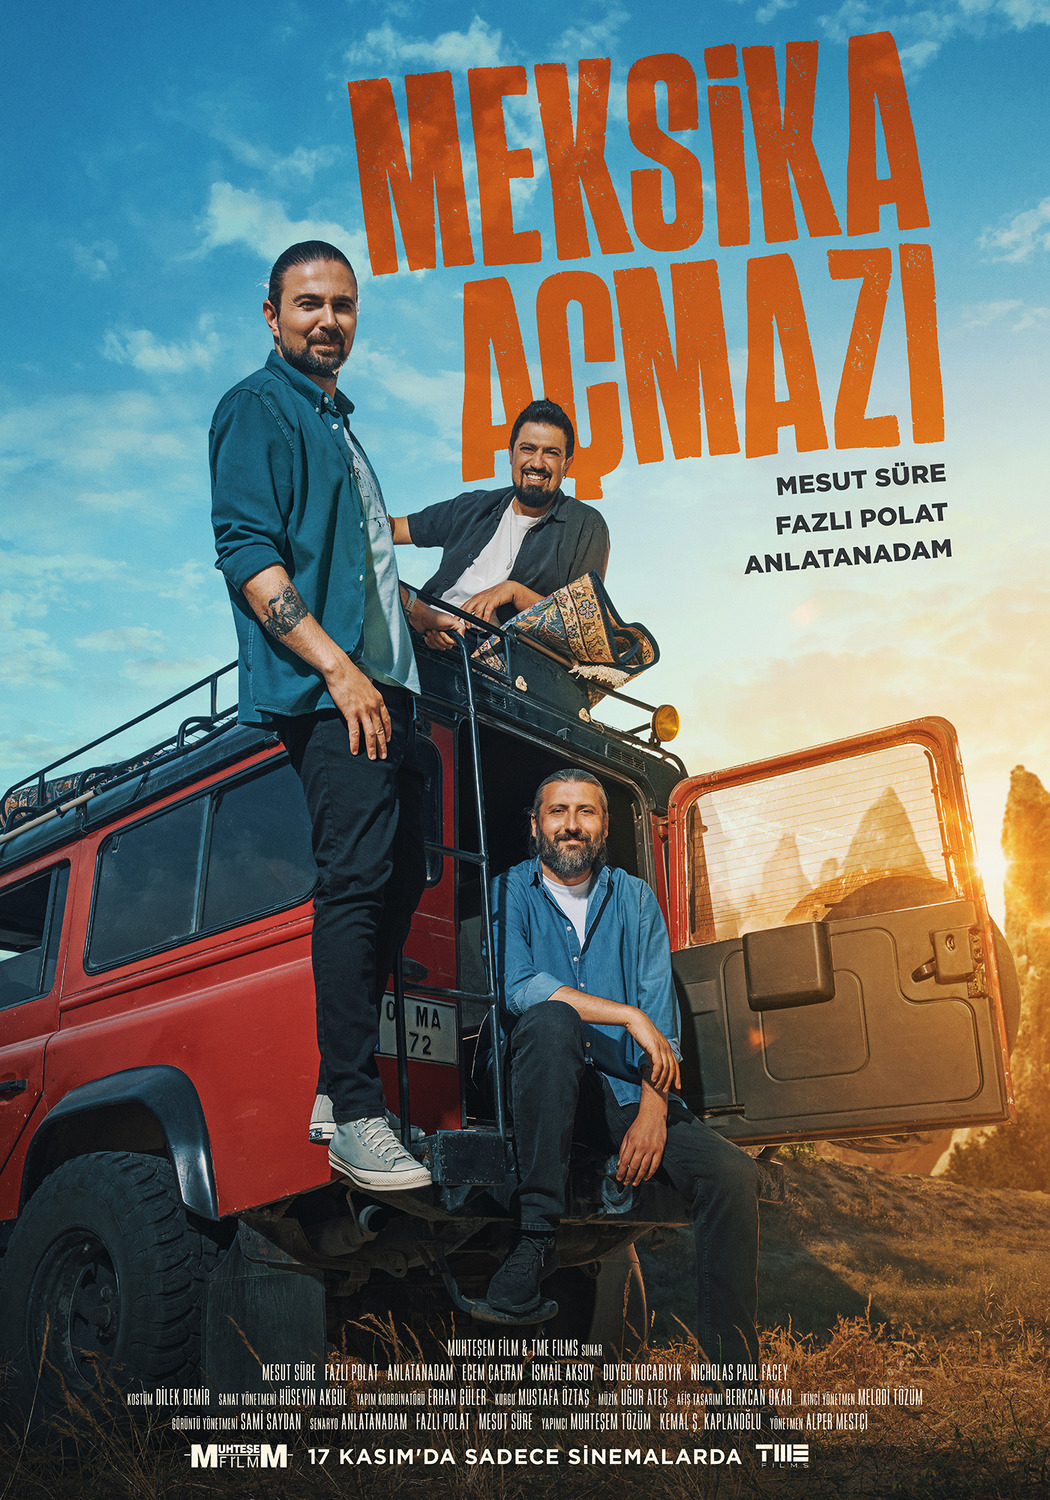 Extra Large Movie Poster Image for Meksika Açmazi (#2 of 6)